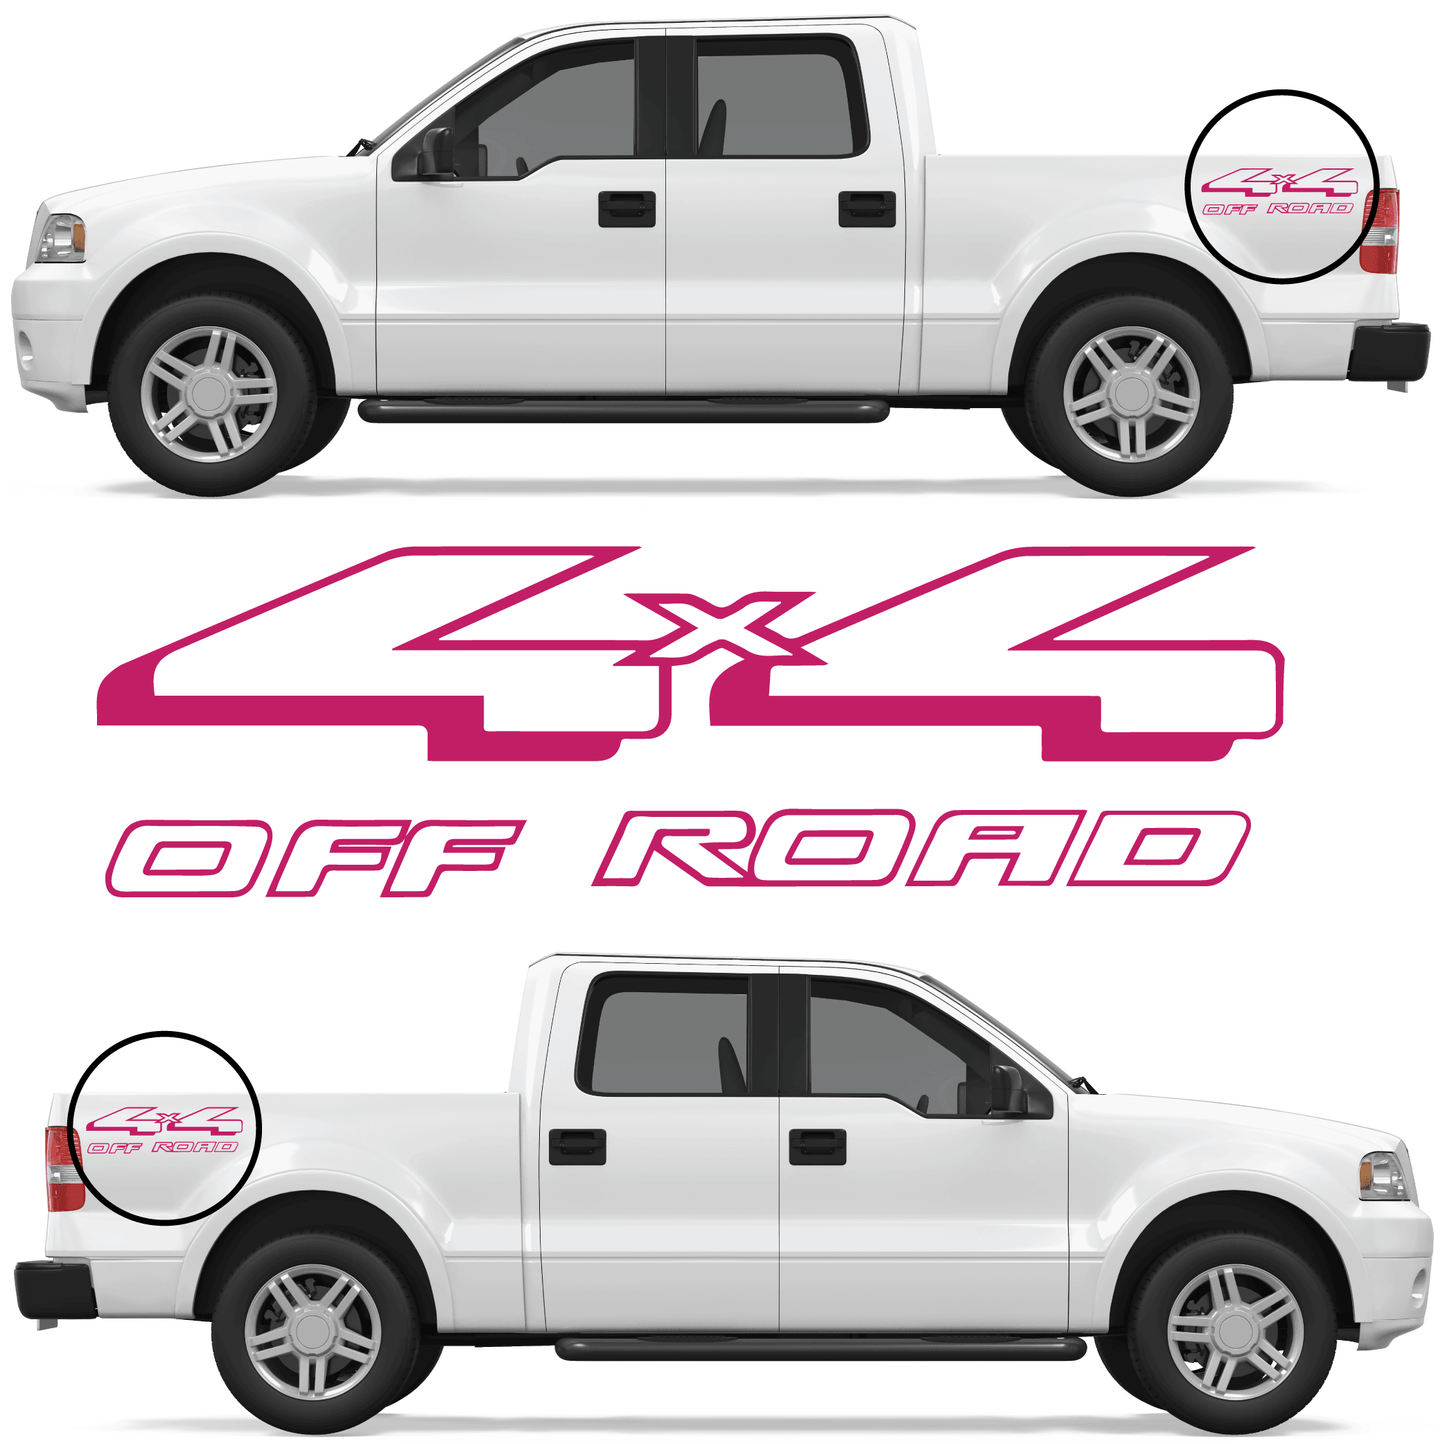 Shop Vinyl Design F-150 F-250 Trucks 4 x 4 Off Road Replacement Bedside Decals #08 (14x4) Vehicle decal 001 Hot Pink Gloss Shop Vinyl Design decals stickers